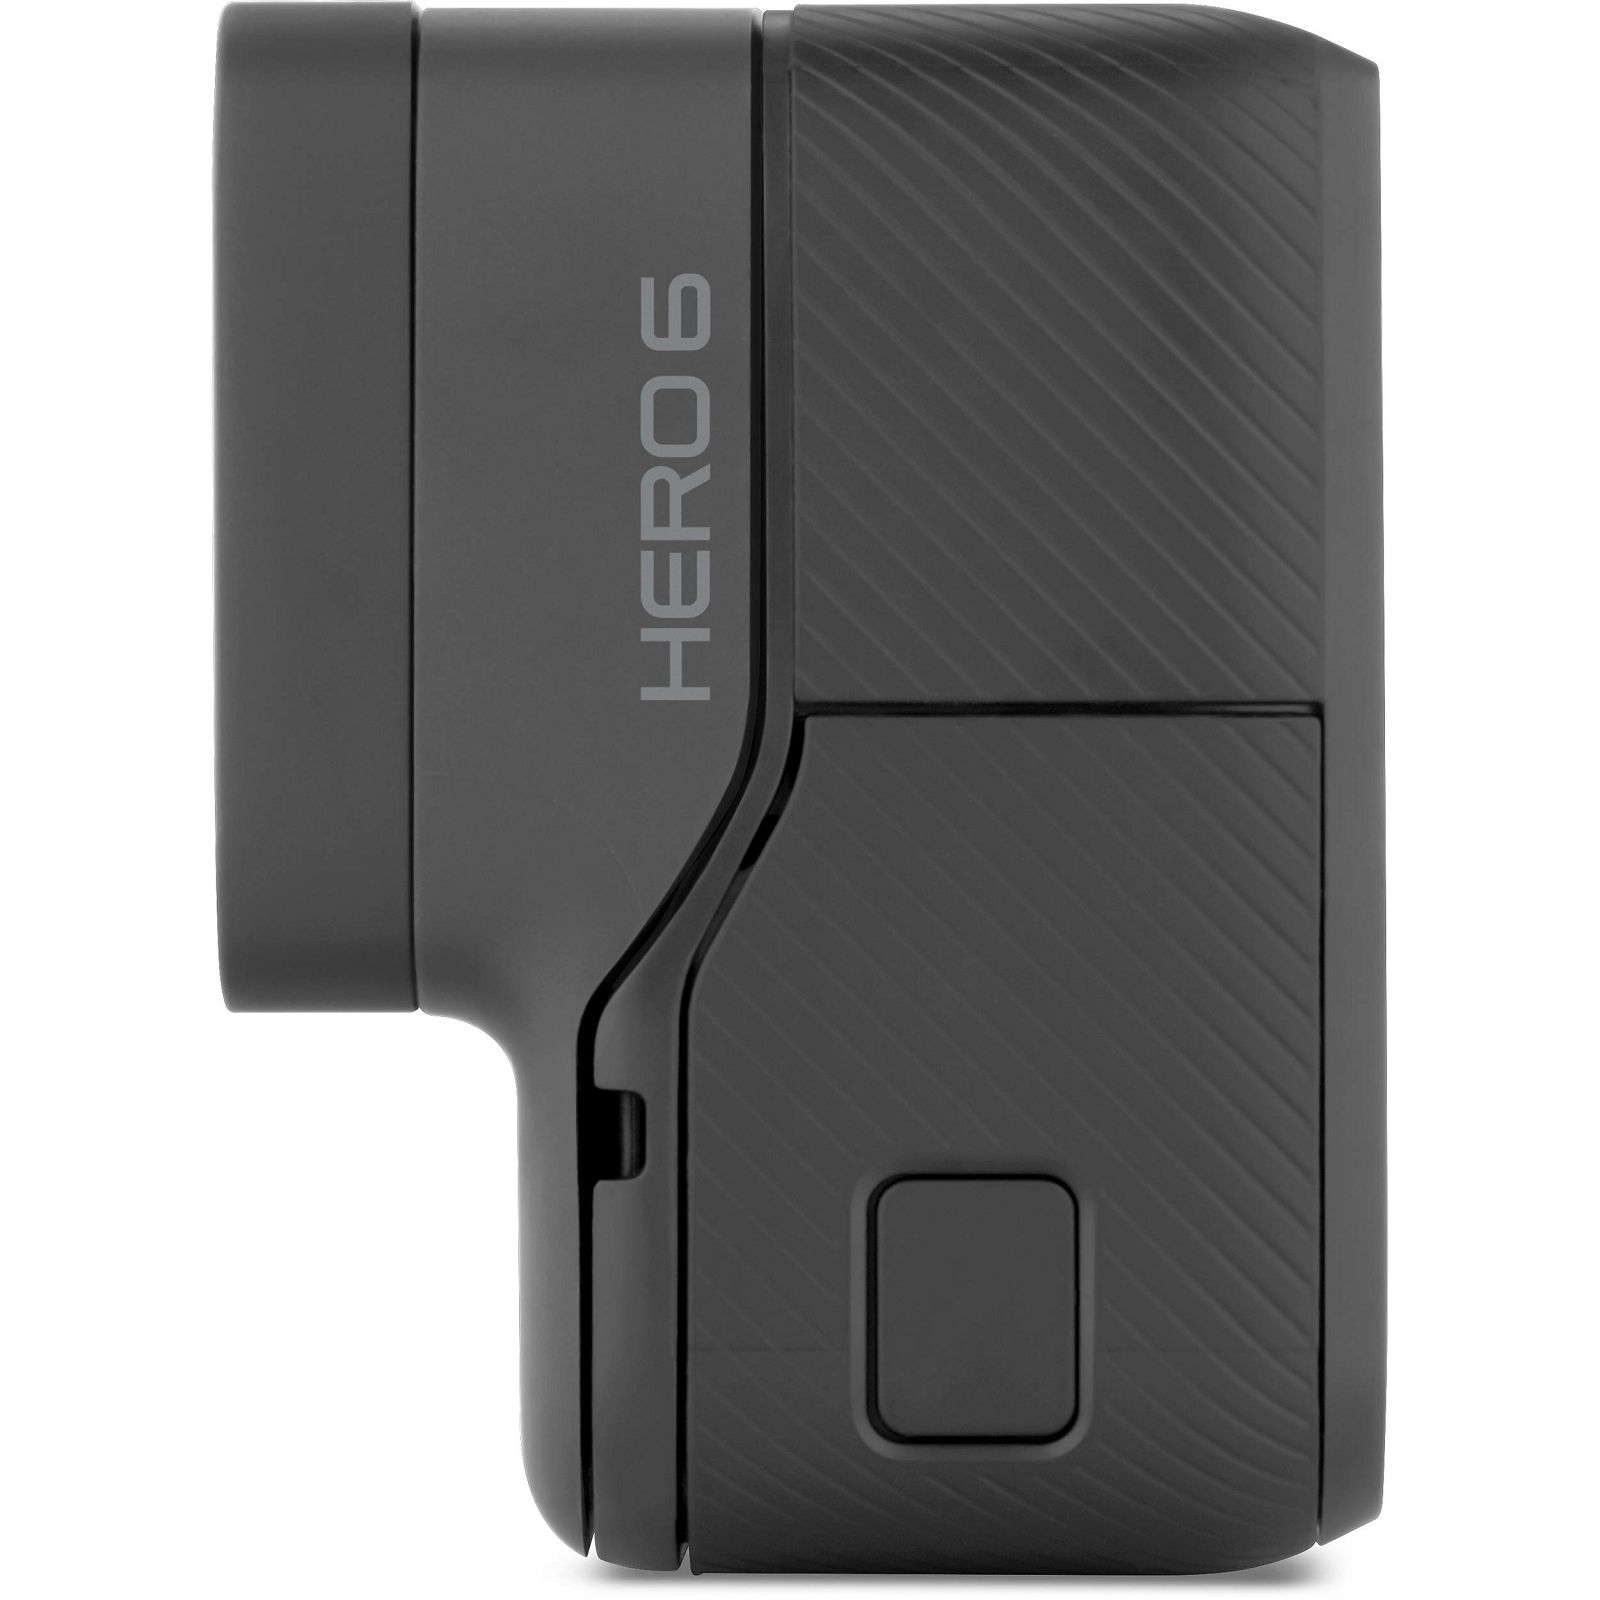 GoPro HERO6 Black Edition 4K60p 2.7K120p 12Mpx WiFi GPS Sportska akcijska digitalna kamera (CHDHX-601)